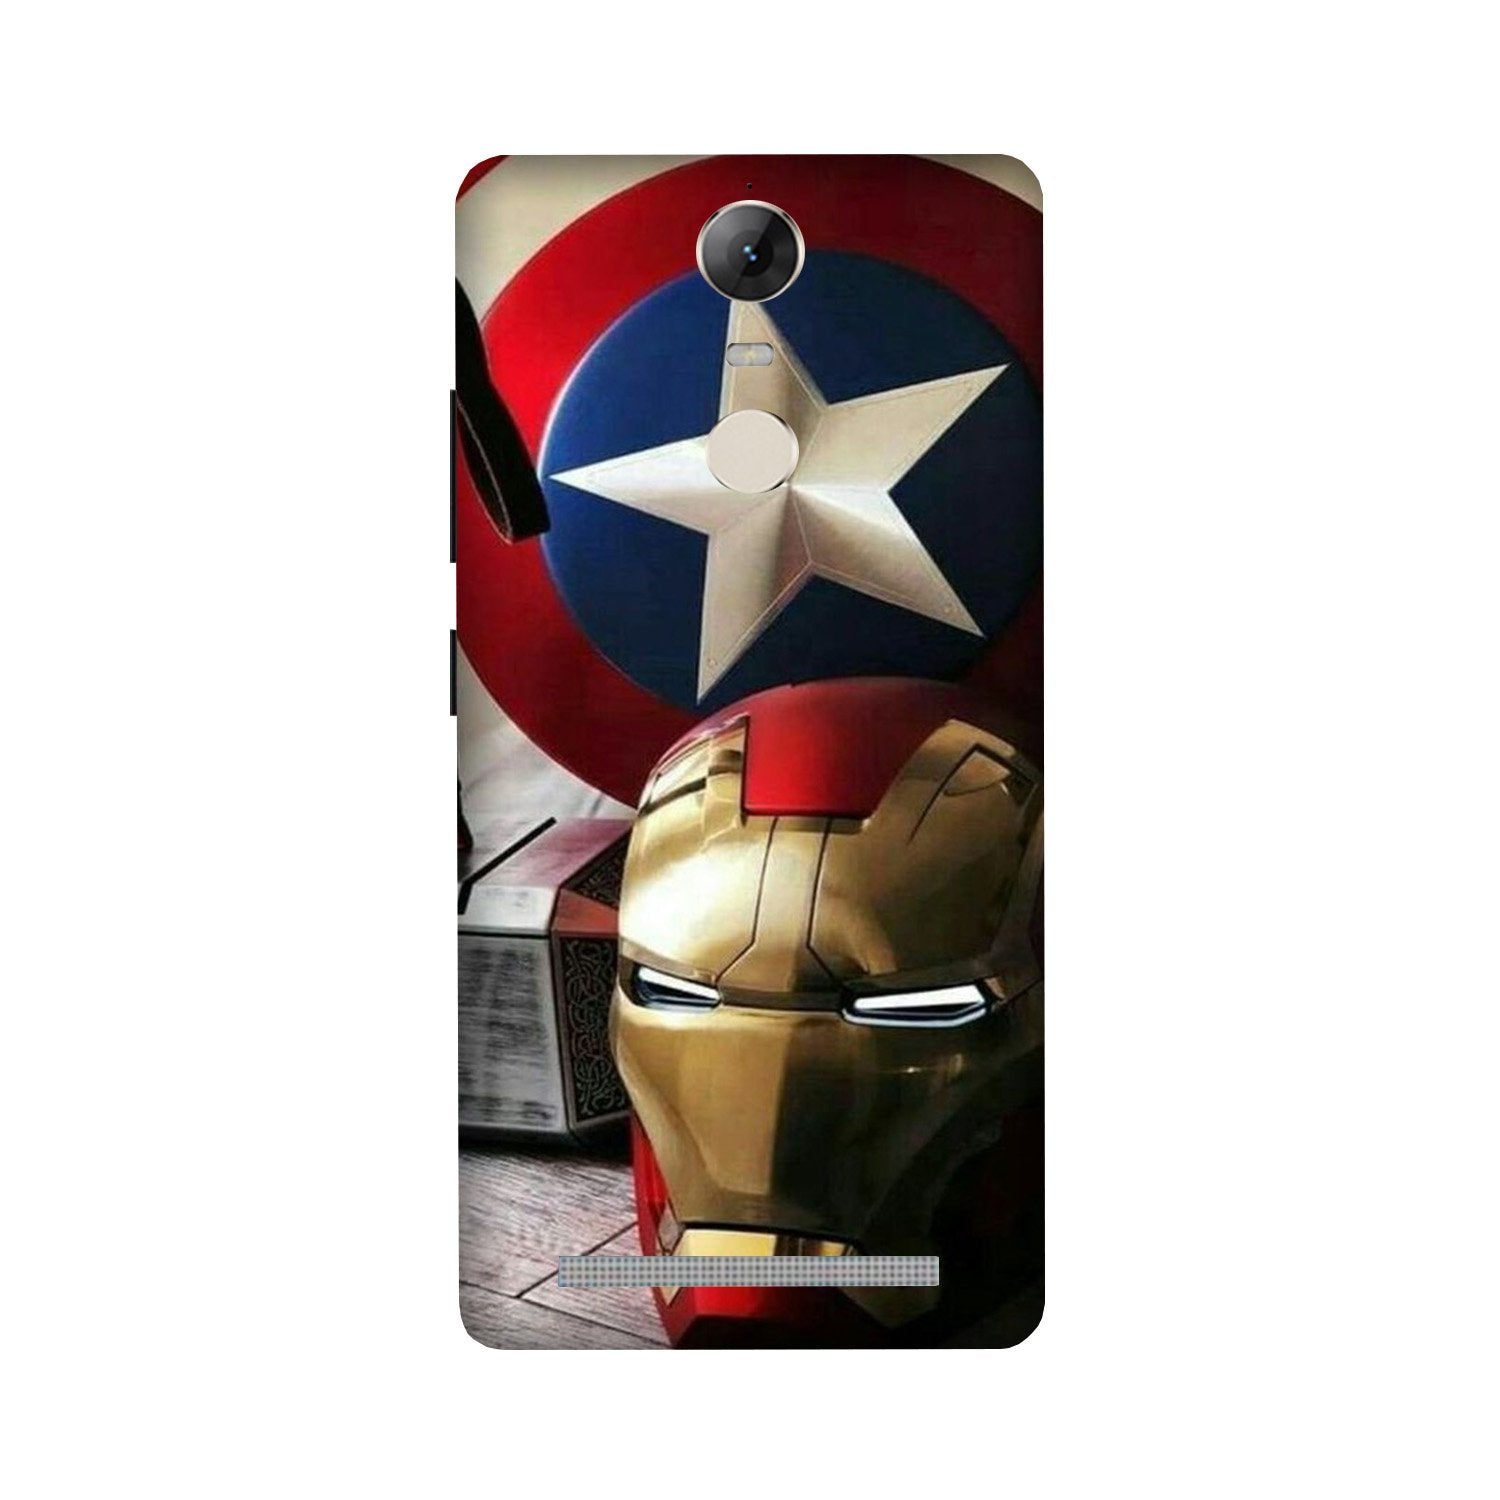 Ironman Captain America Case for Lenovo Vibe K5 Note (Design No. 254)